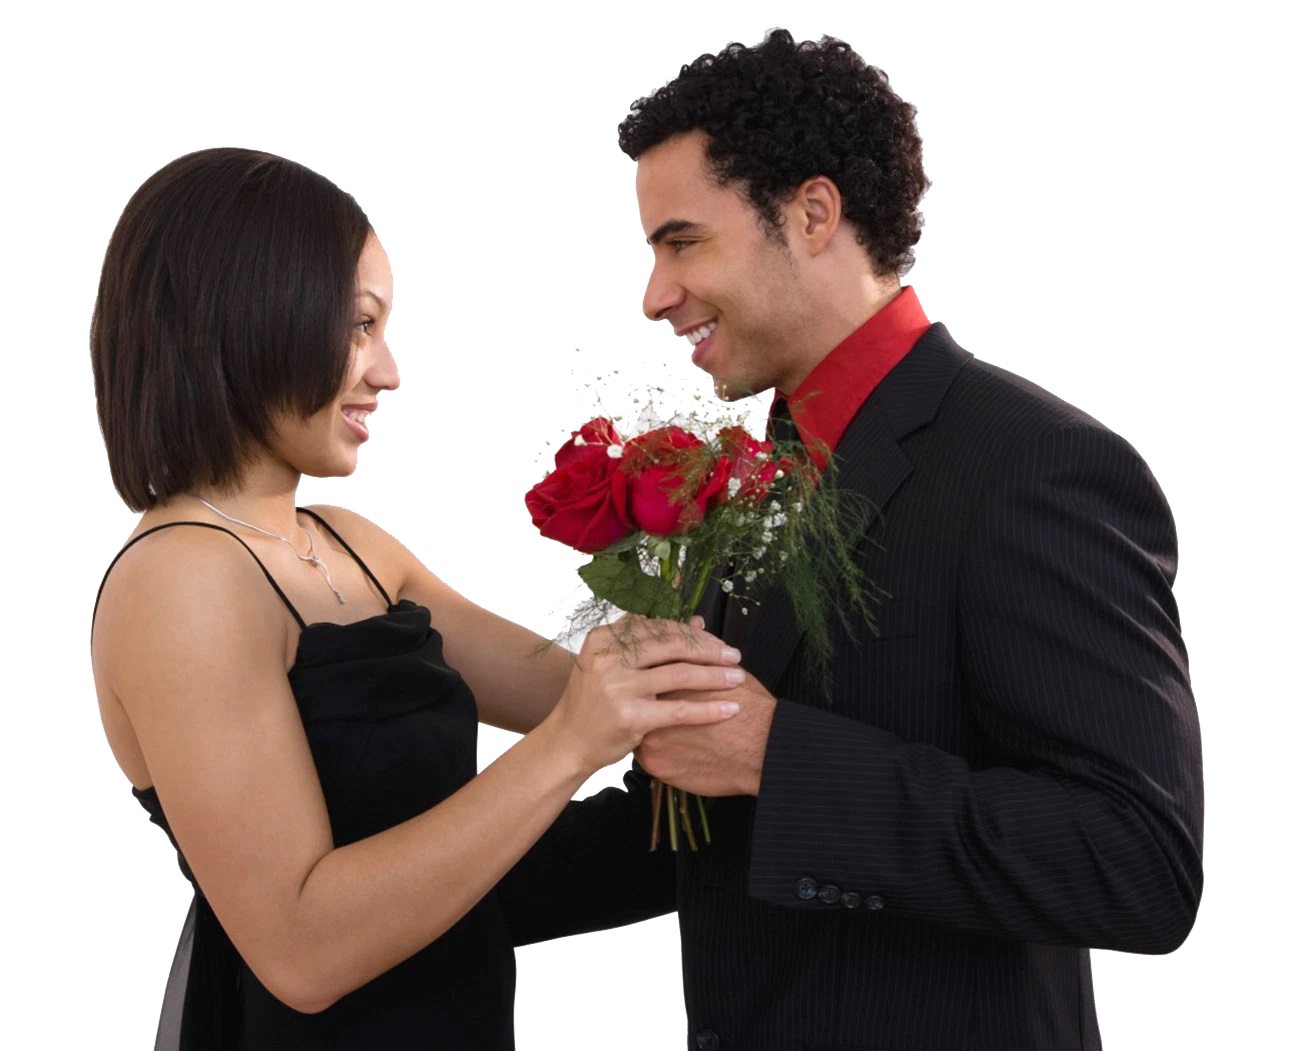 Дарит цветы. Мужчина дарит цветы. Мужчина дарит букет цветов женщине. Мужчина дарит цветы девушке.